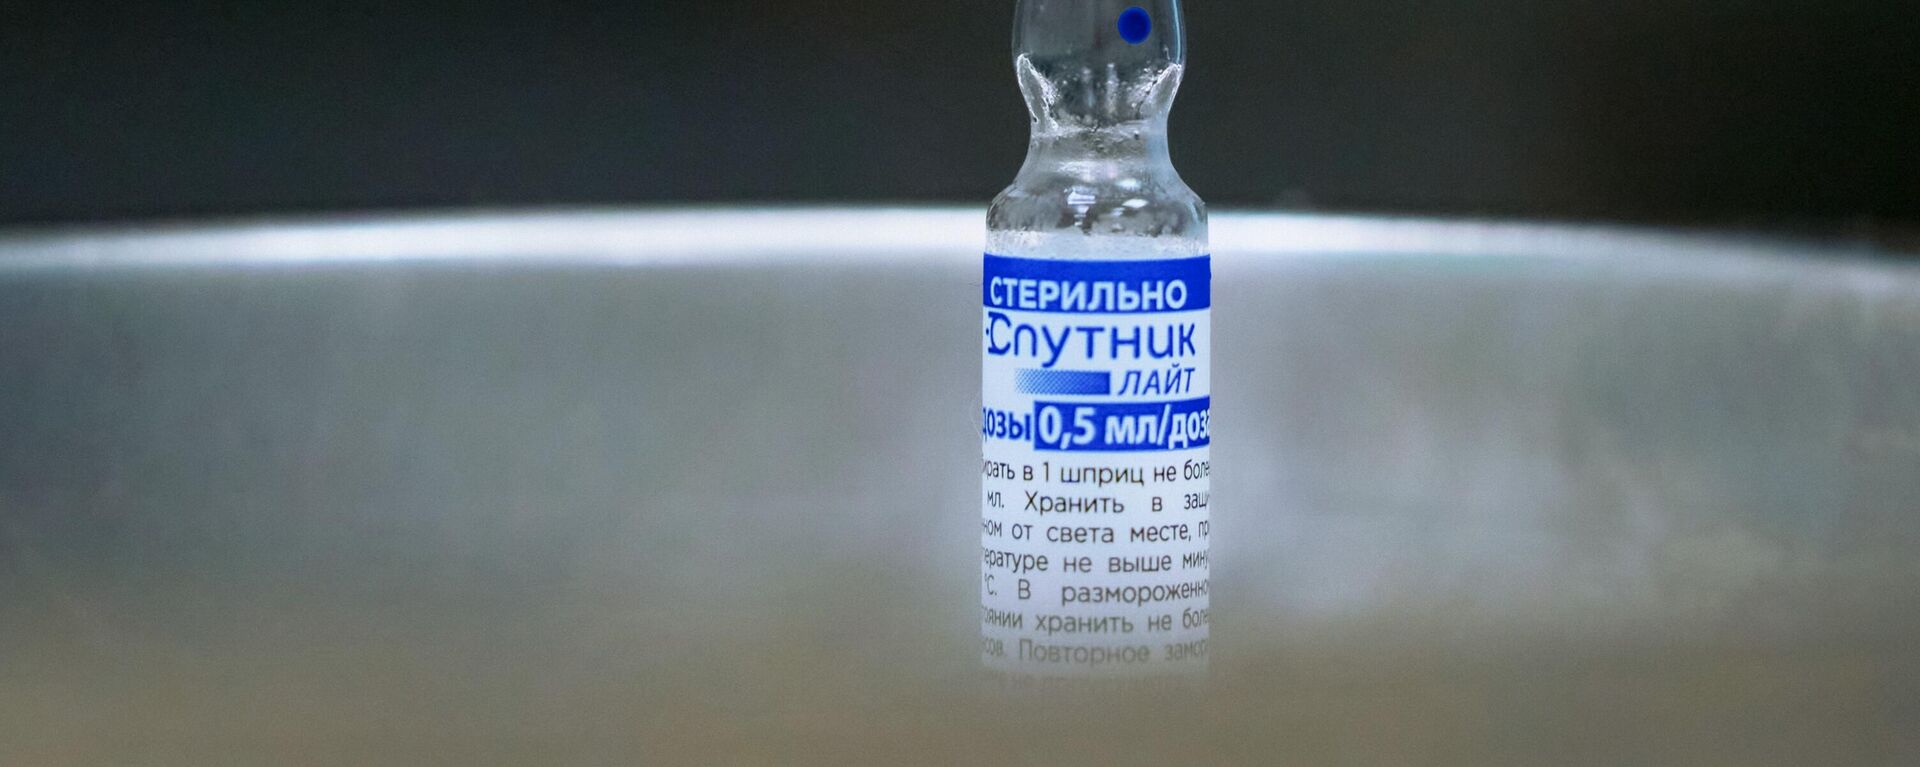 Vacuna monodosis rusa Sputnik Light - Sputnik Mundo, 1920, 23.08.2021